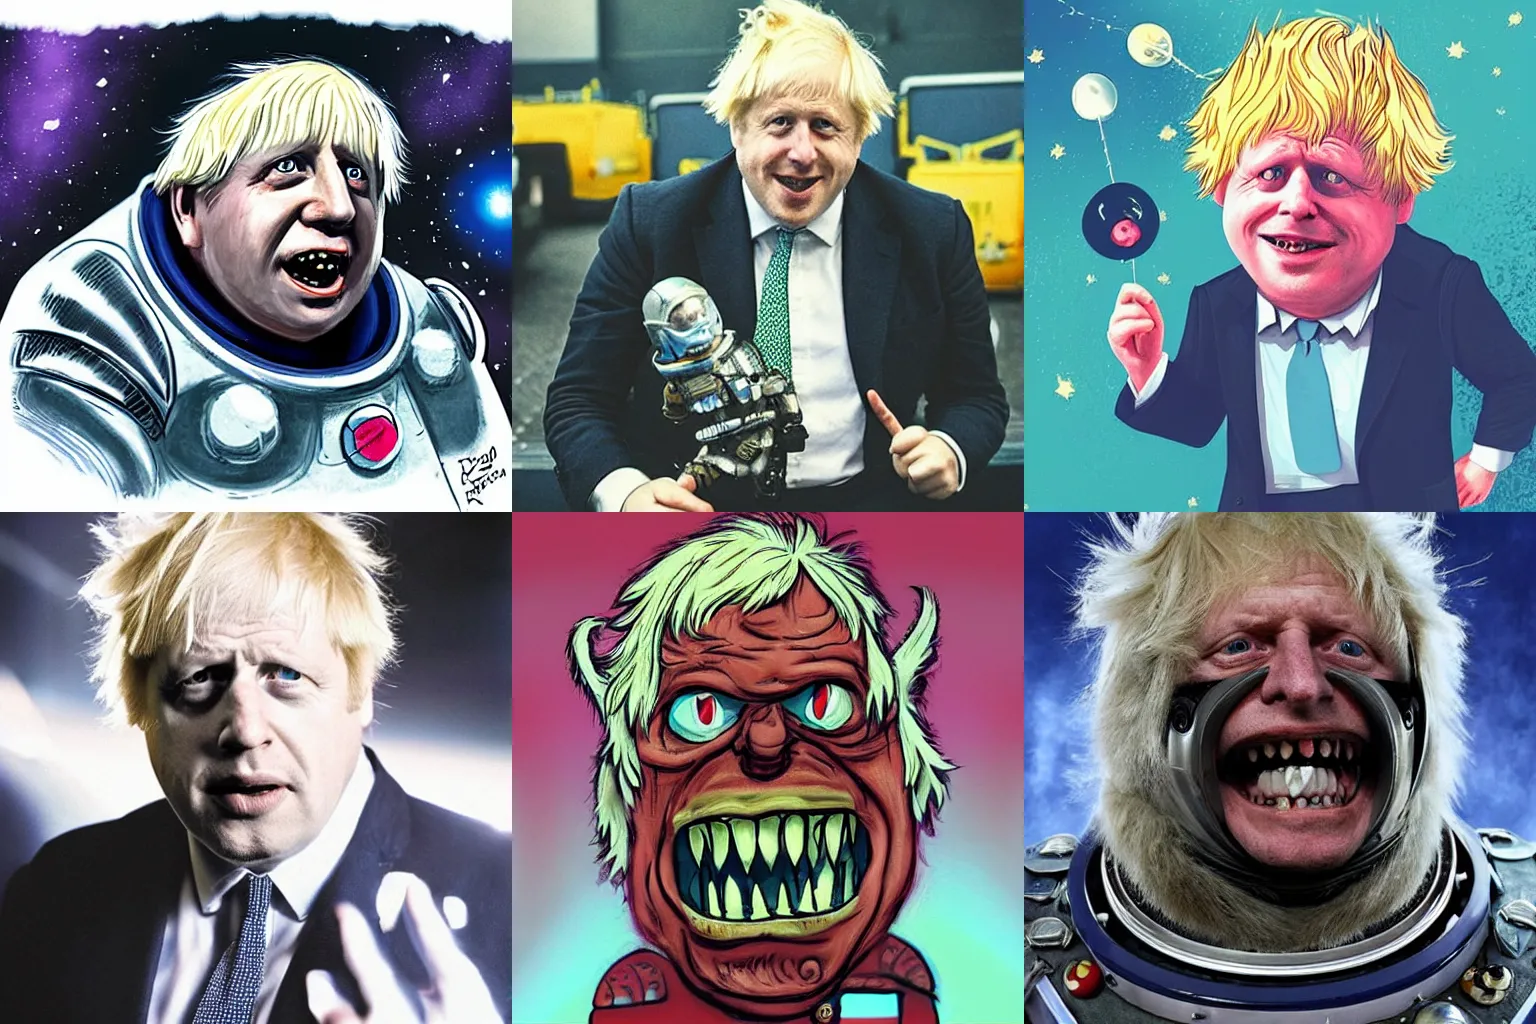 Prompt: “Boris Johnson as a Space Ork”